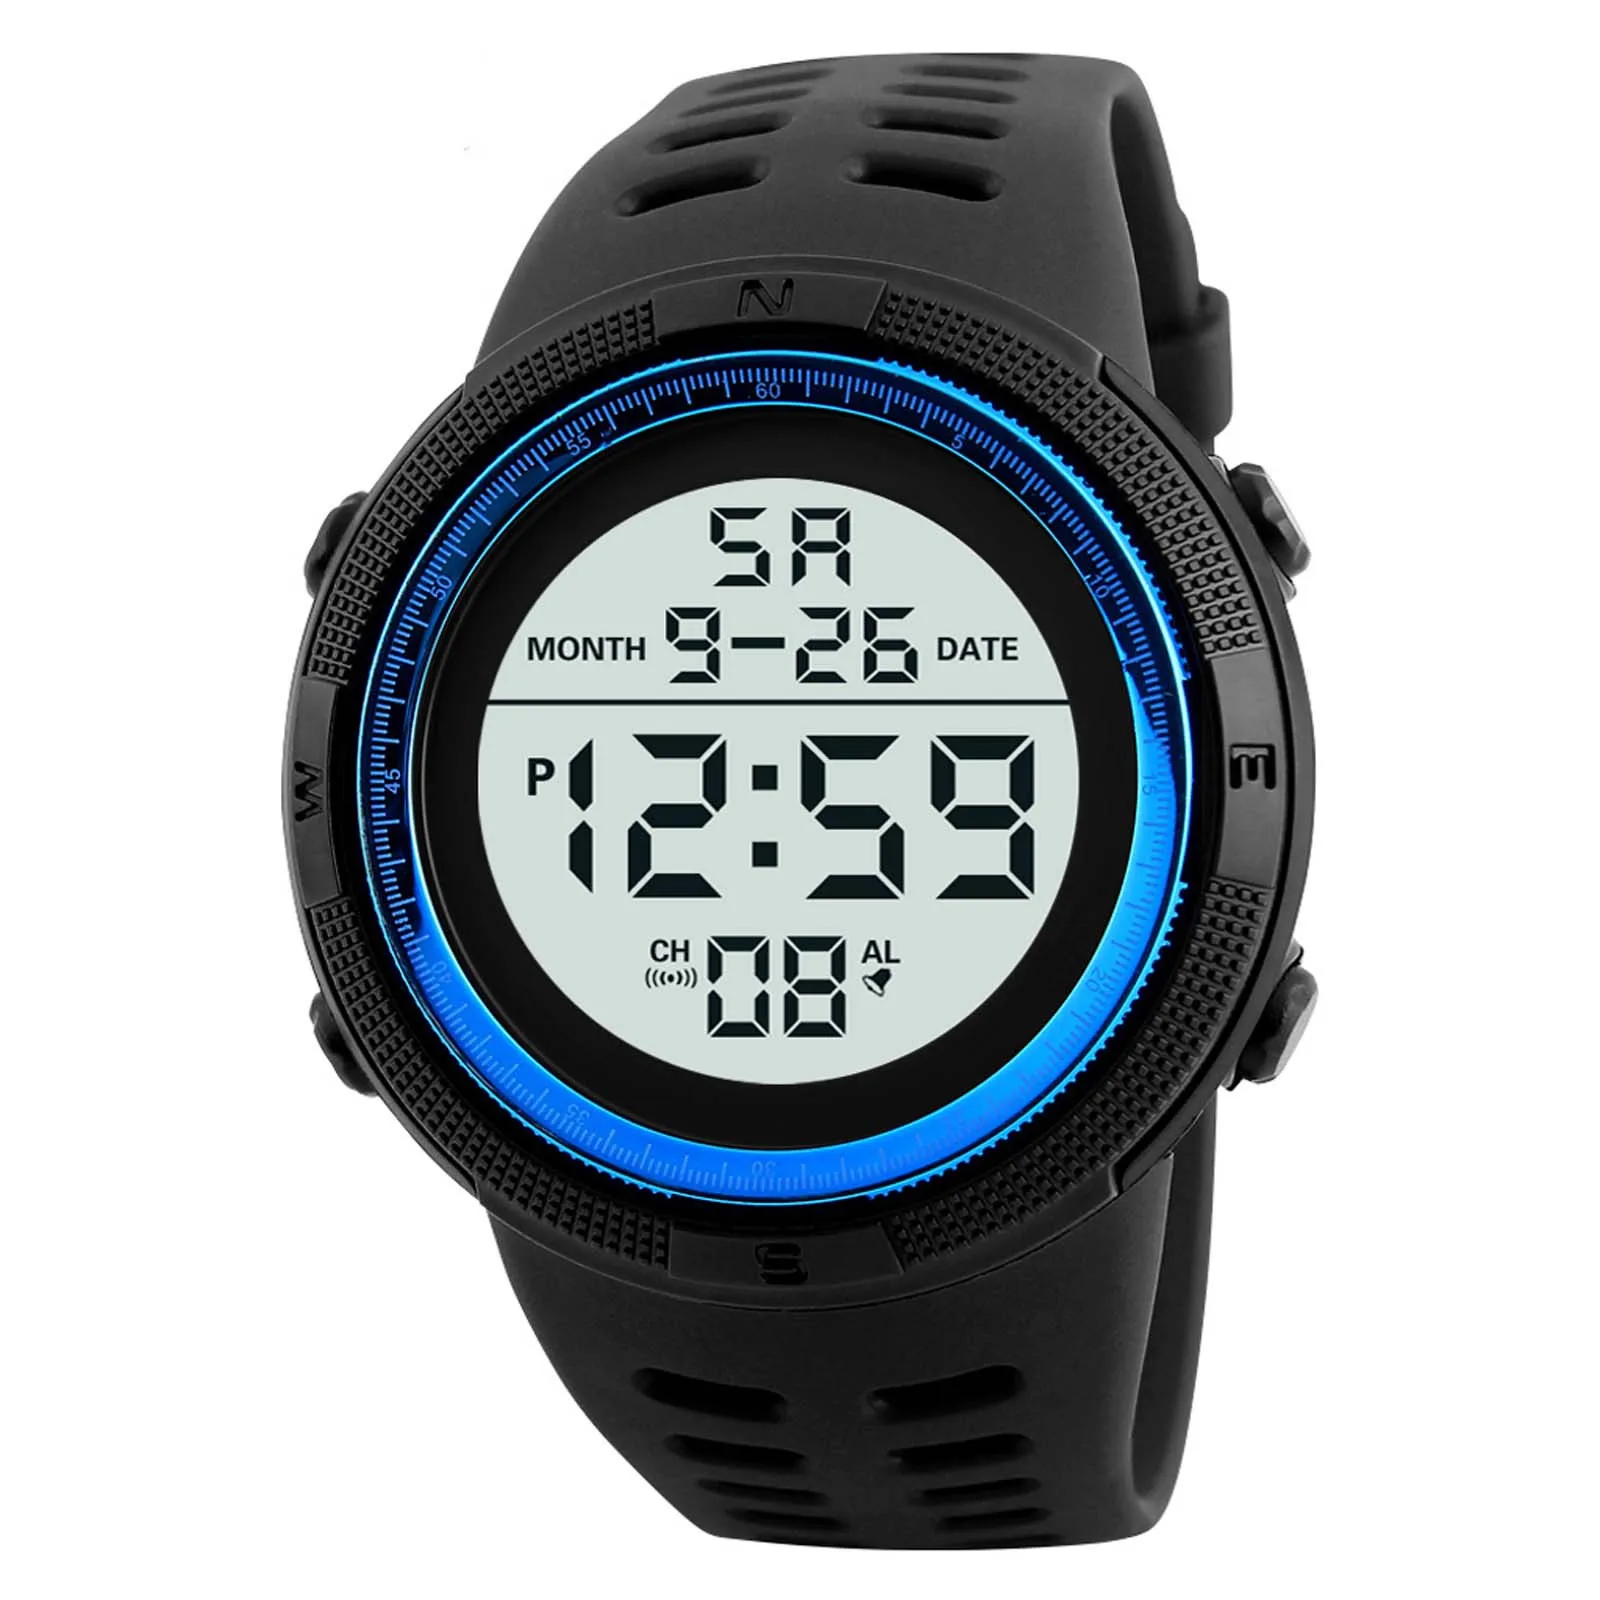 

Honhx Luxury Mens Digital Led Watch Date Sport Men Outdoor Electronic Watch Relogio Masculino Waterproof Watches Часы Мужские